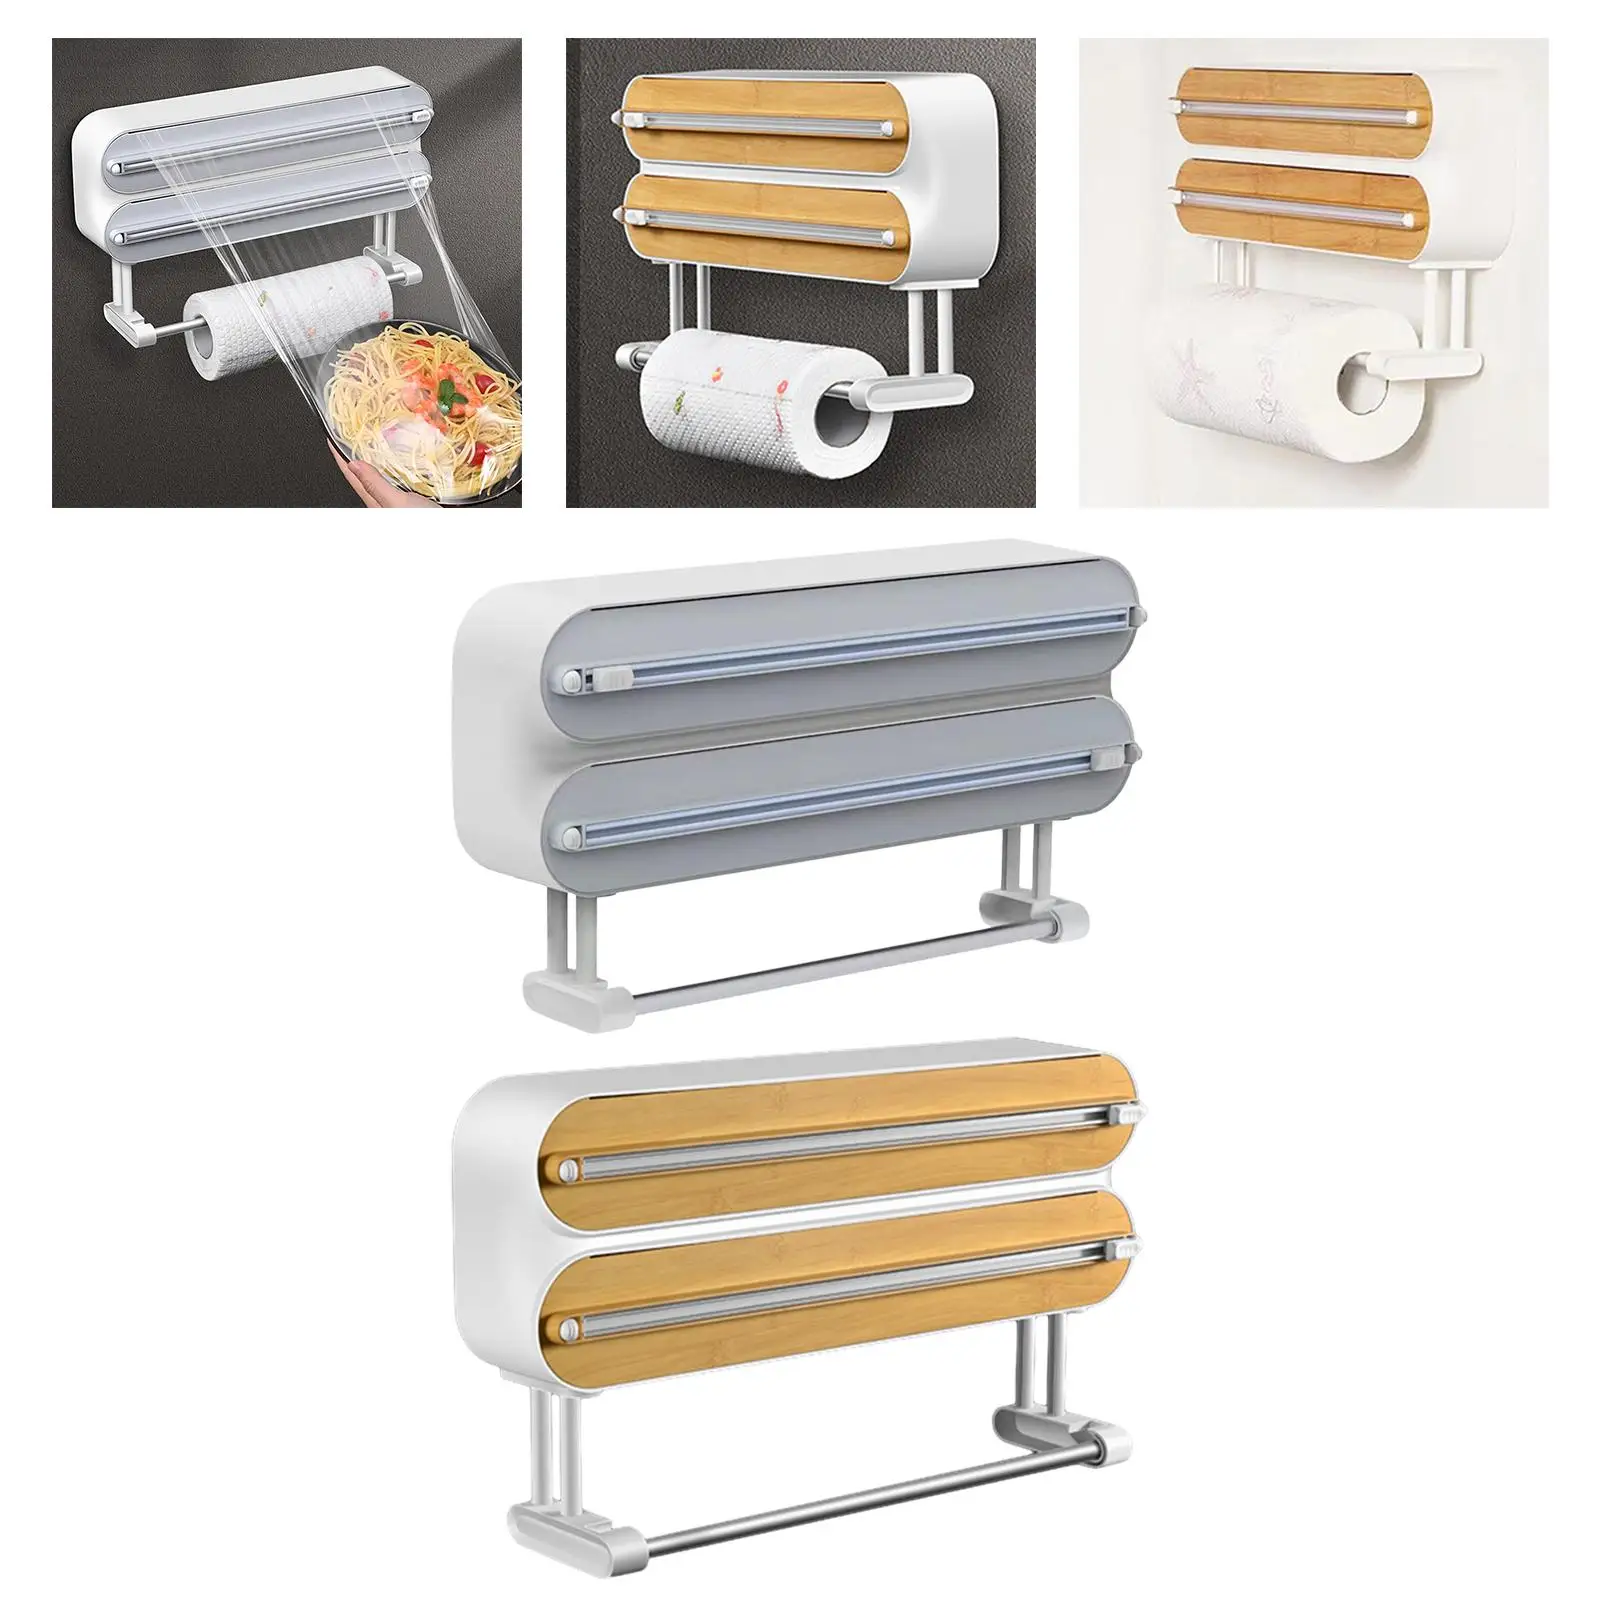 Cling Film Dispenser Slide Cutter Household Food Wrap Cutter Multipurpose for Kitchen Desktop Household Refrigerator Baking